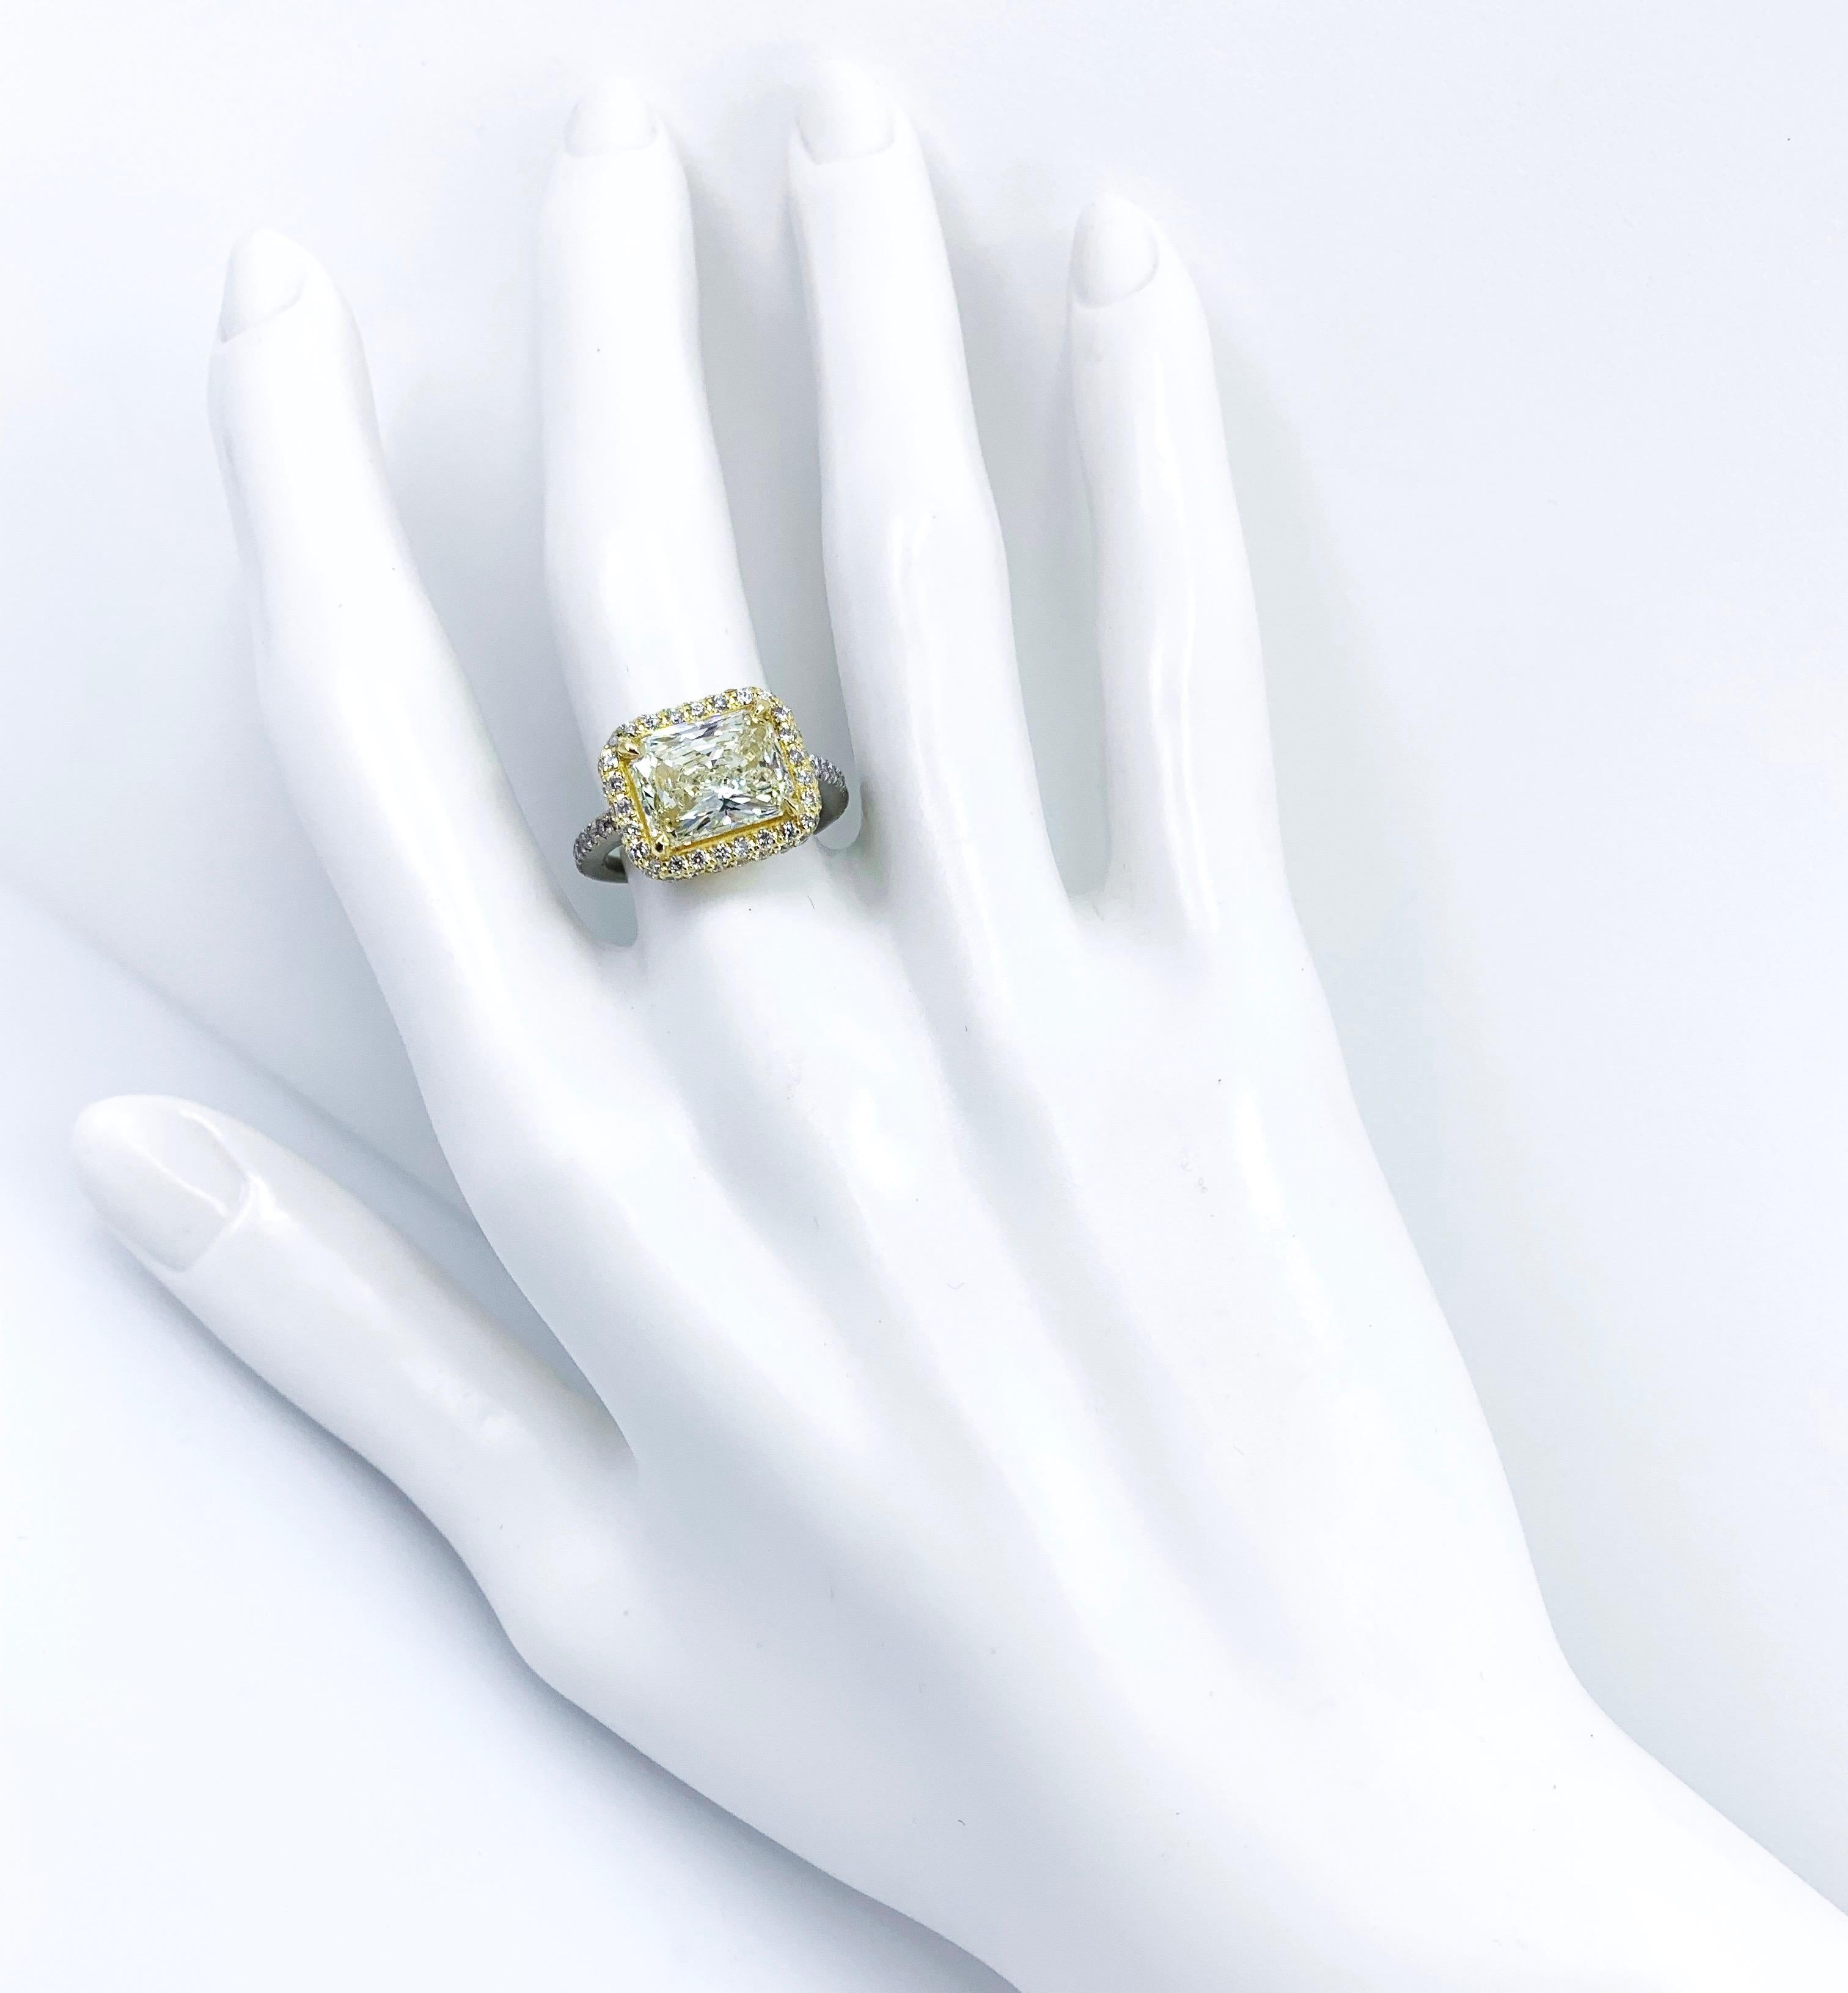 3.55 carat diamond ring